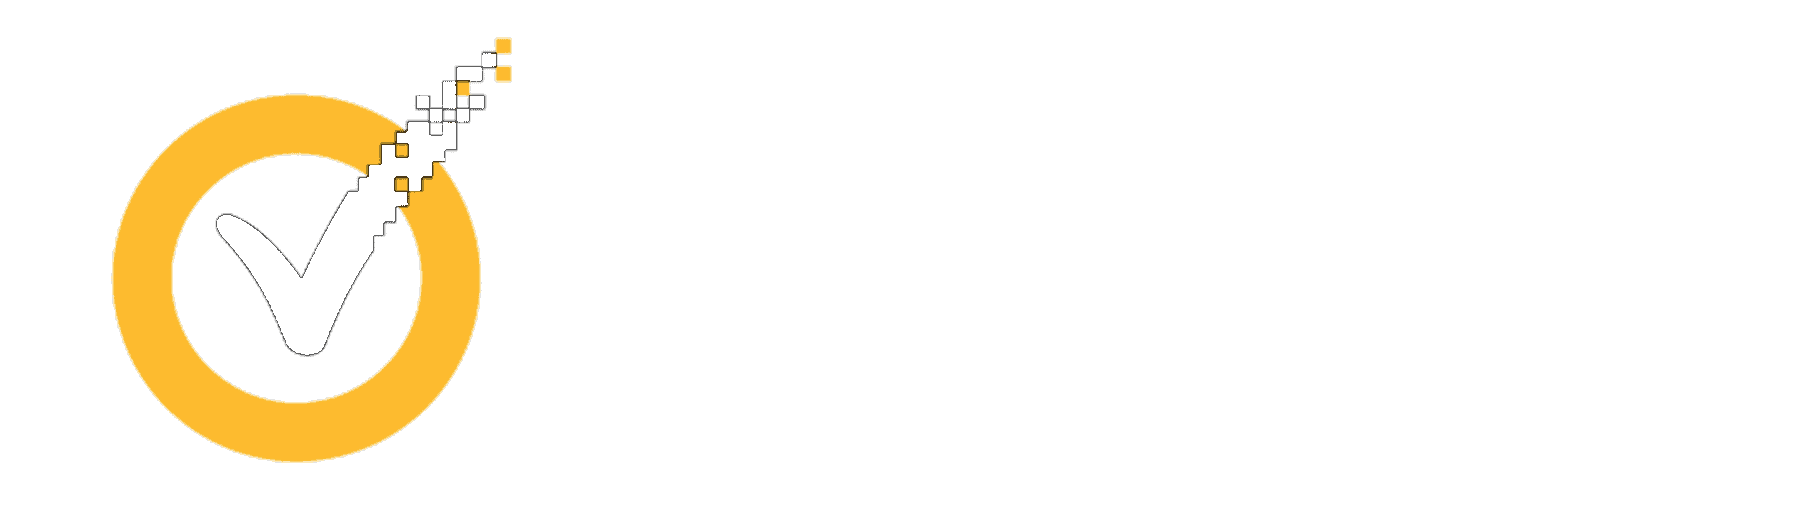 Norton-Antivirus-logo-white